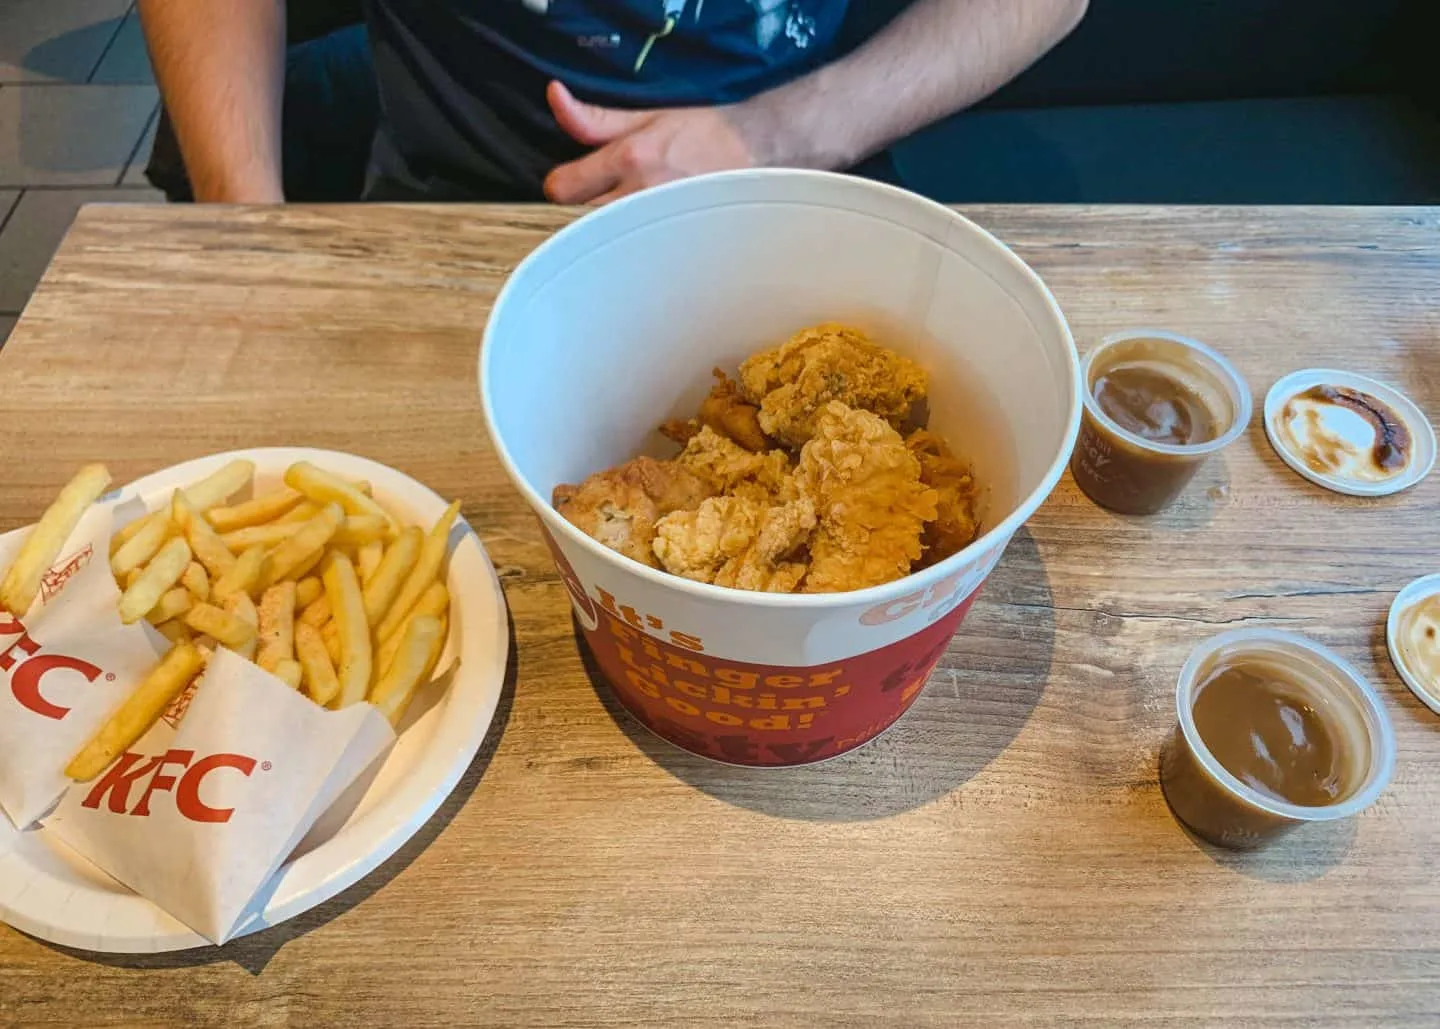 KFC in Iceland